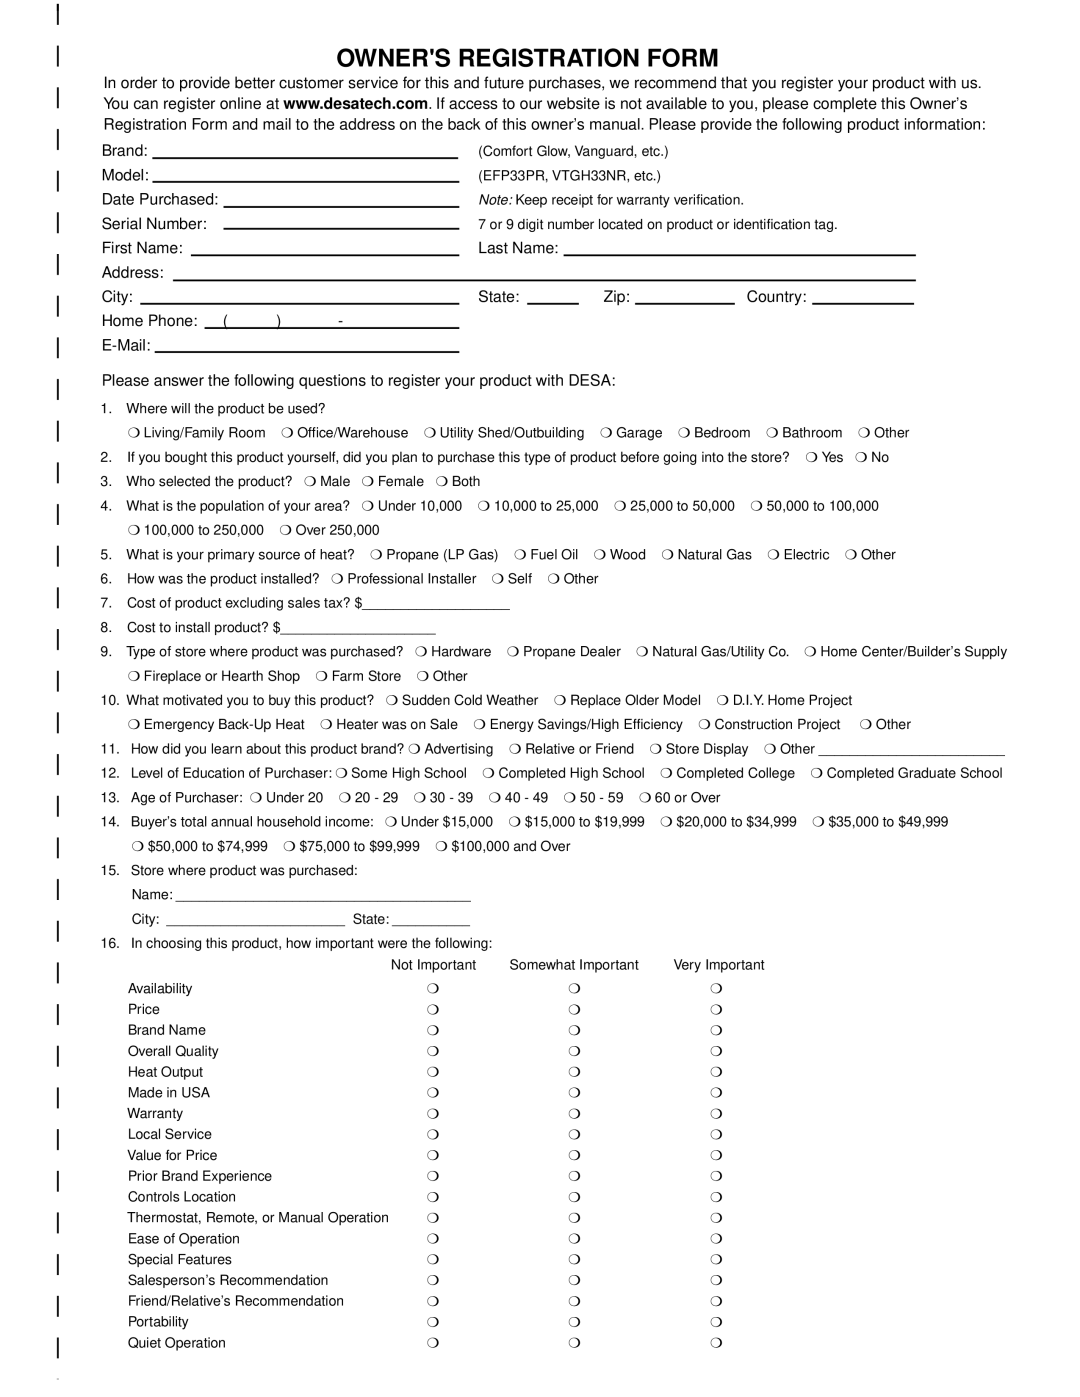 Desa CHDV42NRA, (V)V42PA(1) installation manual Owners Registration Form 